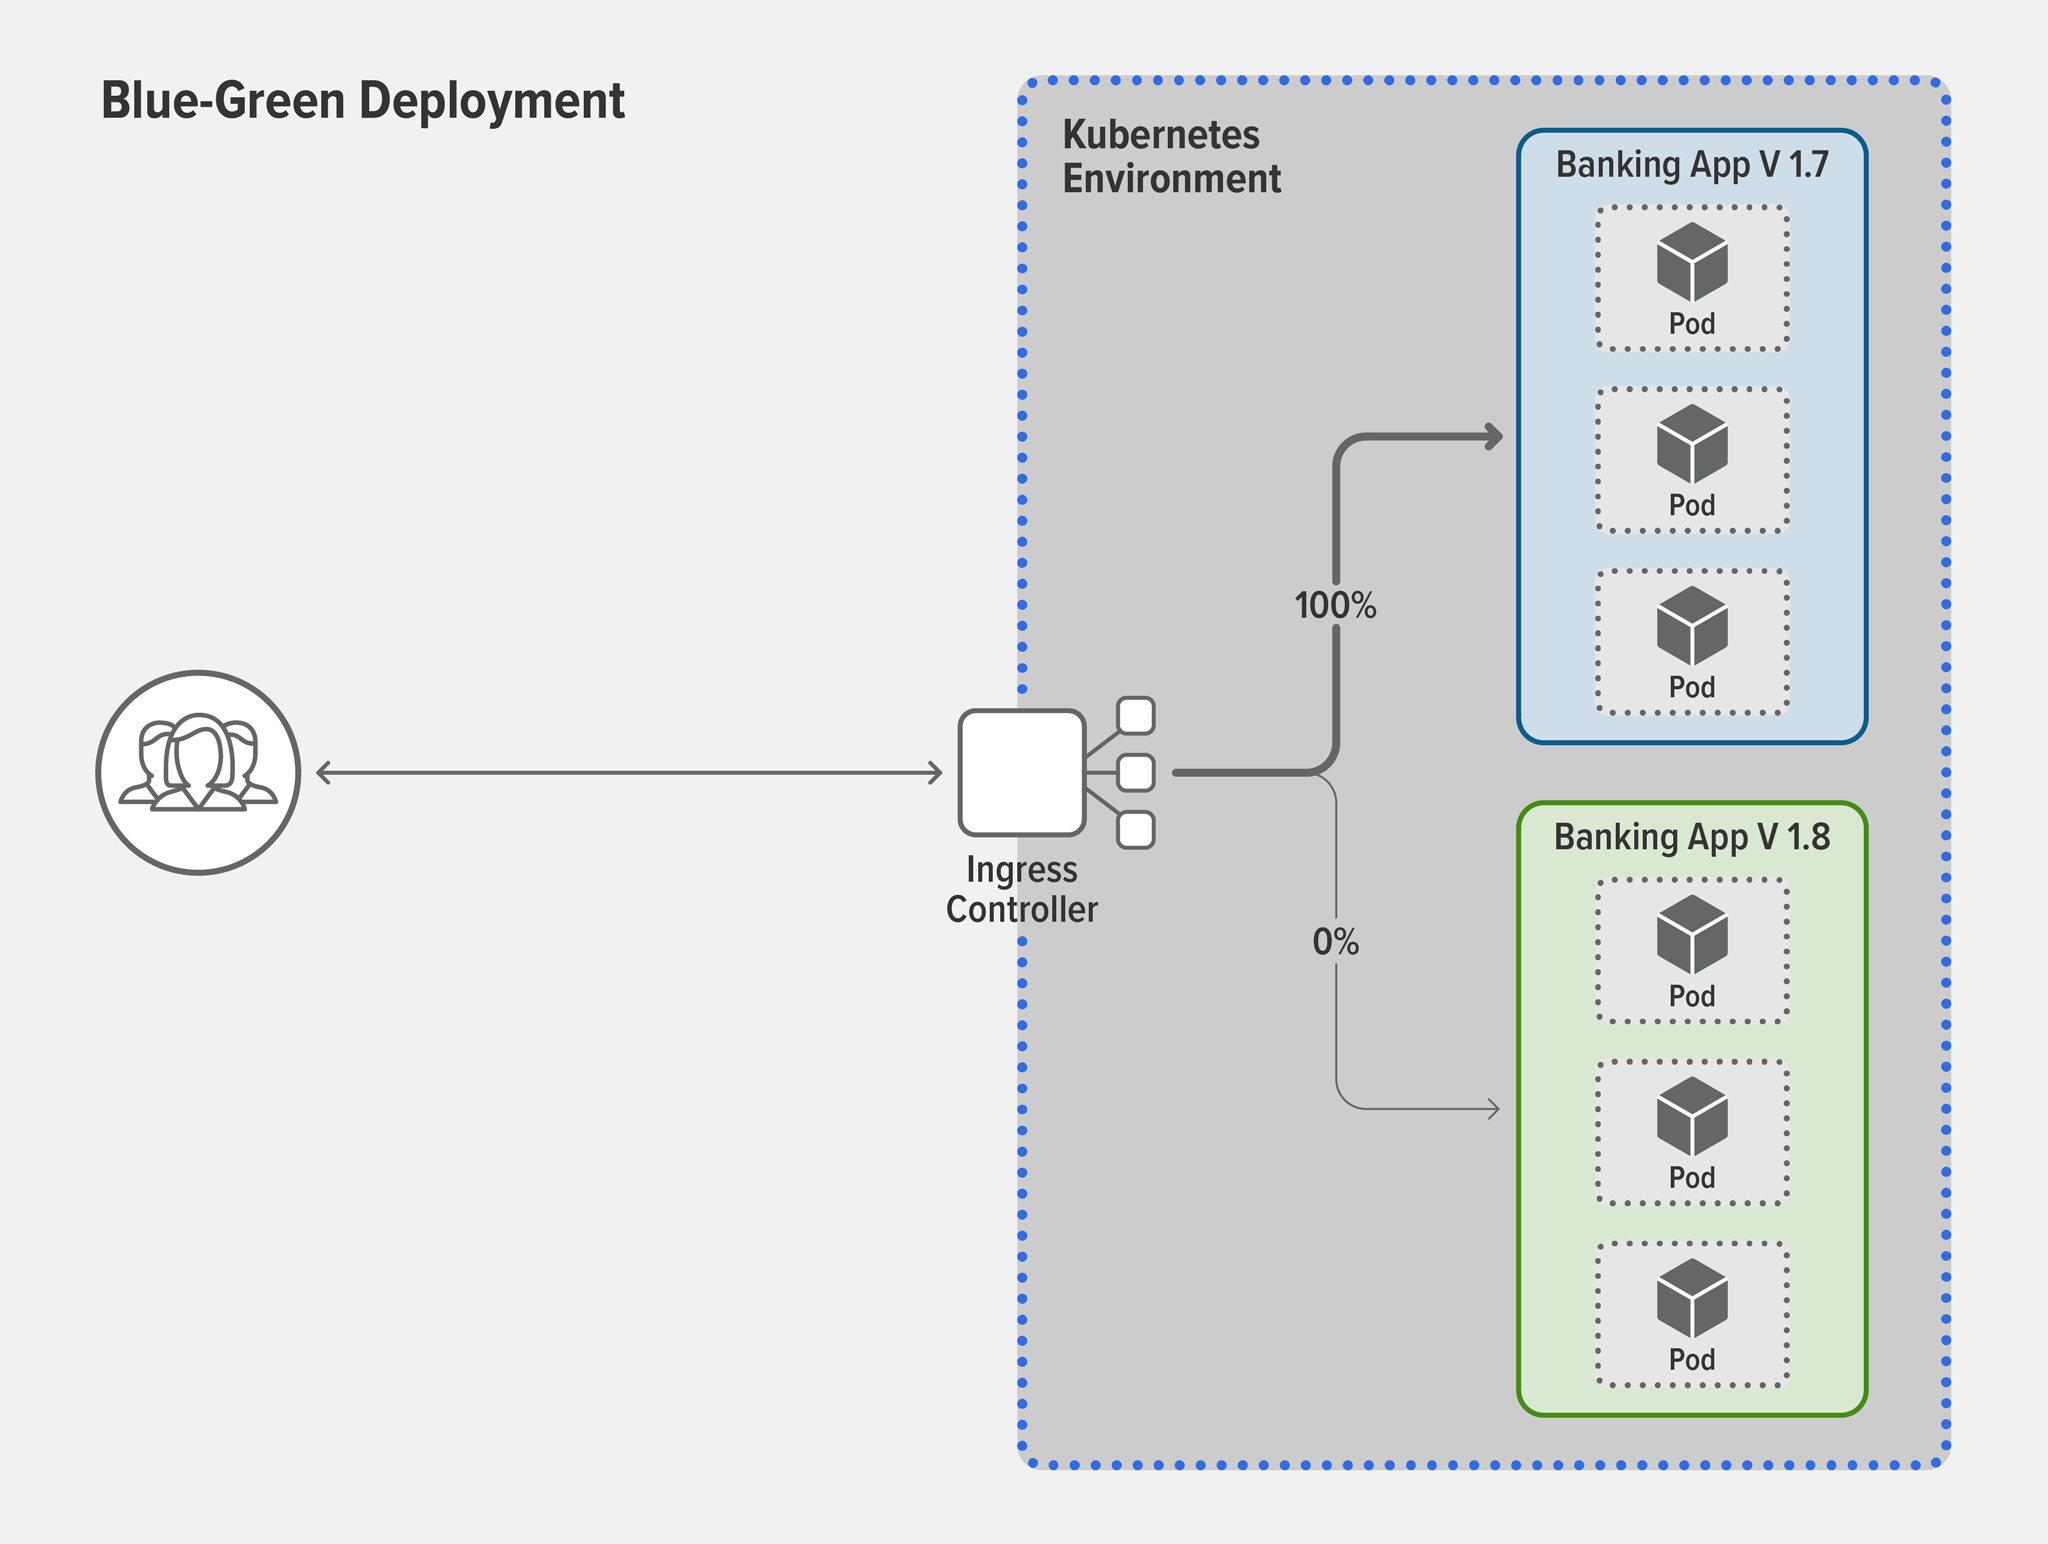 Topology diagram of blue-green deployment using an Ingress controller to split traffic